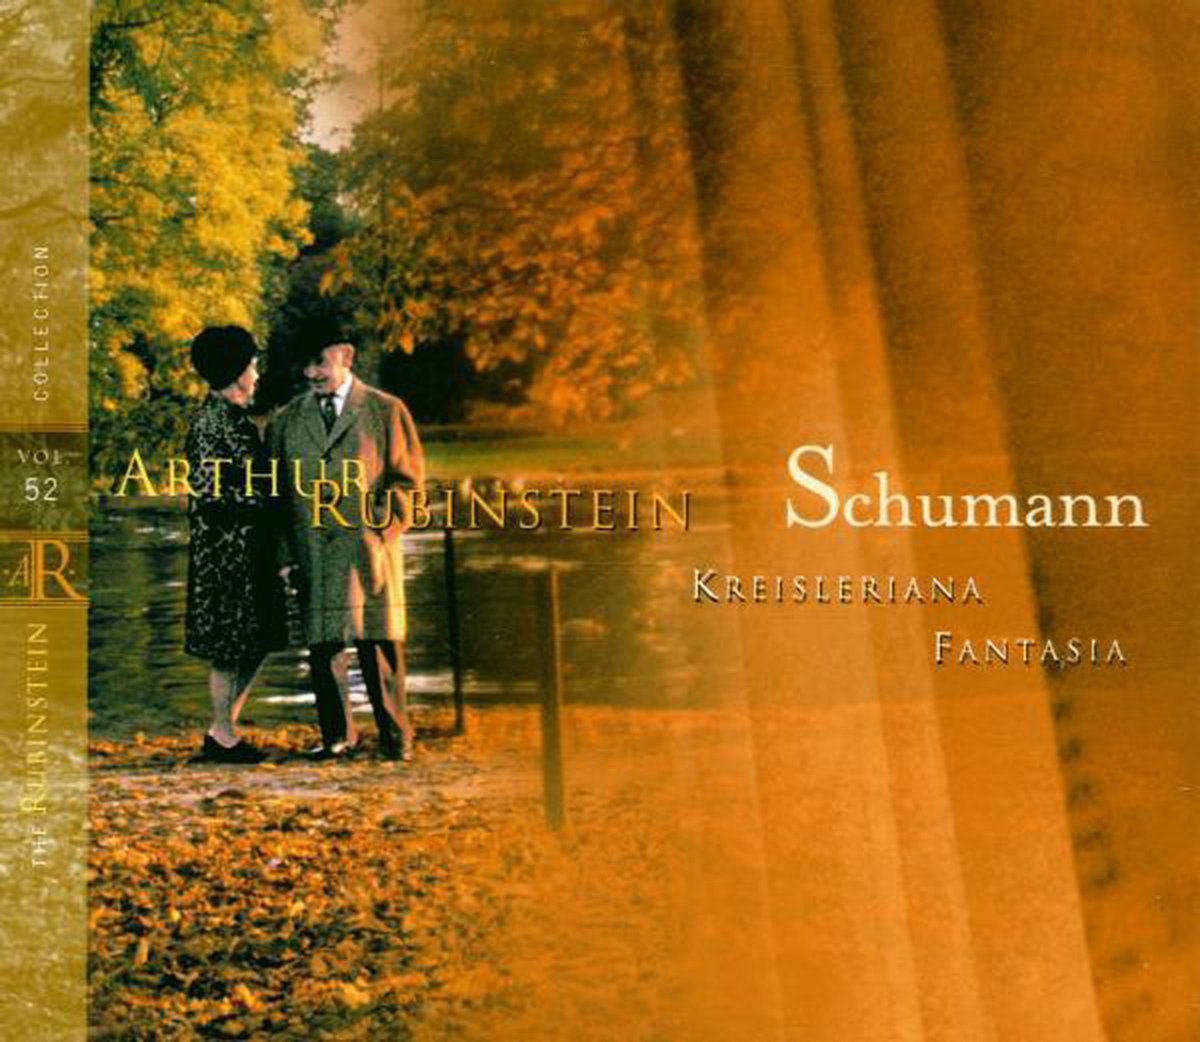 Afbeelding van product The Rubinstein Collection Vol 52 - Schumann: Kreisleriana, Fantasia  - Artur Rubinstein